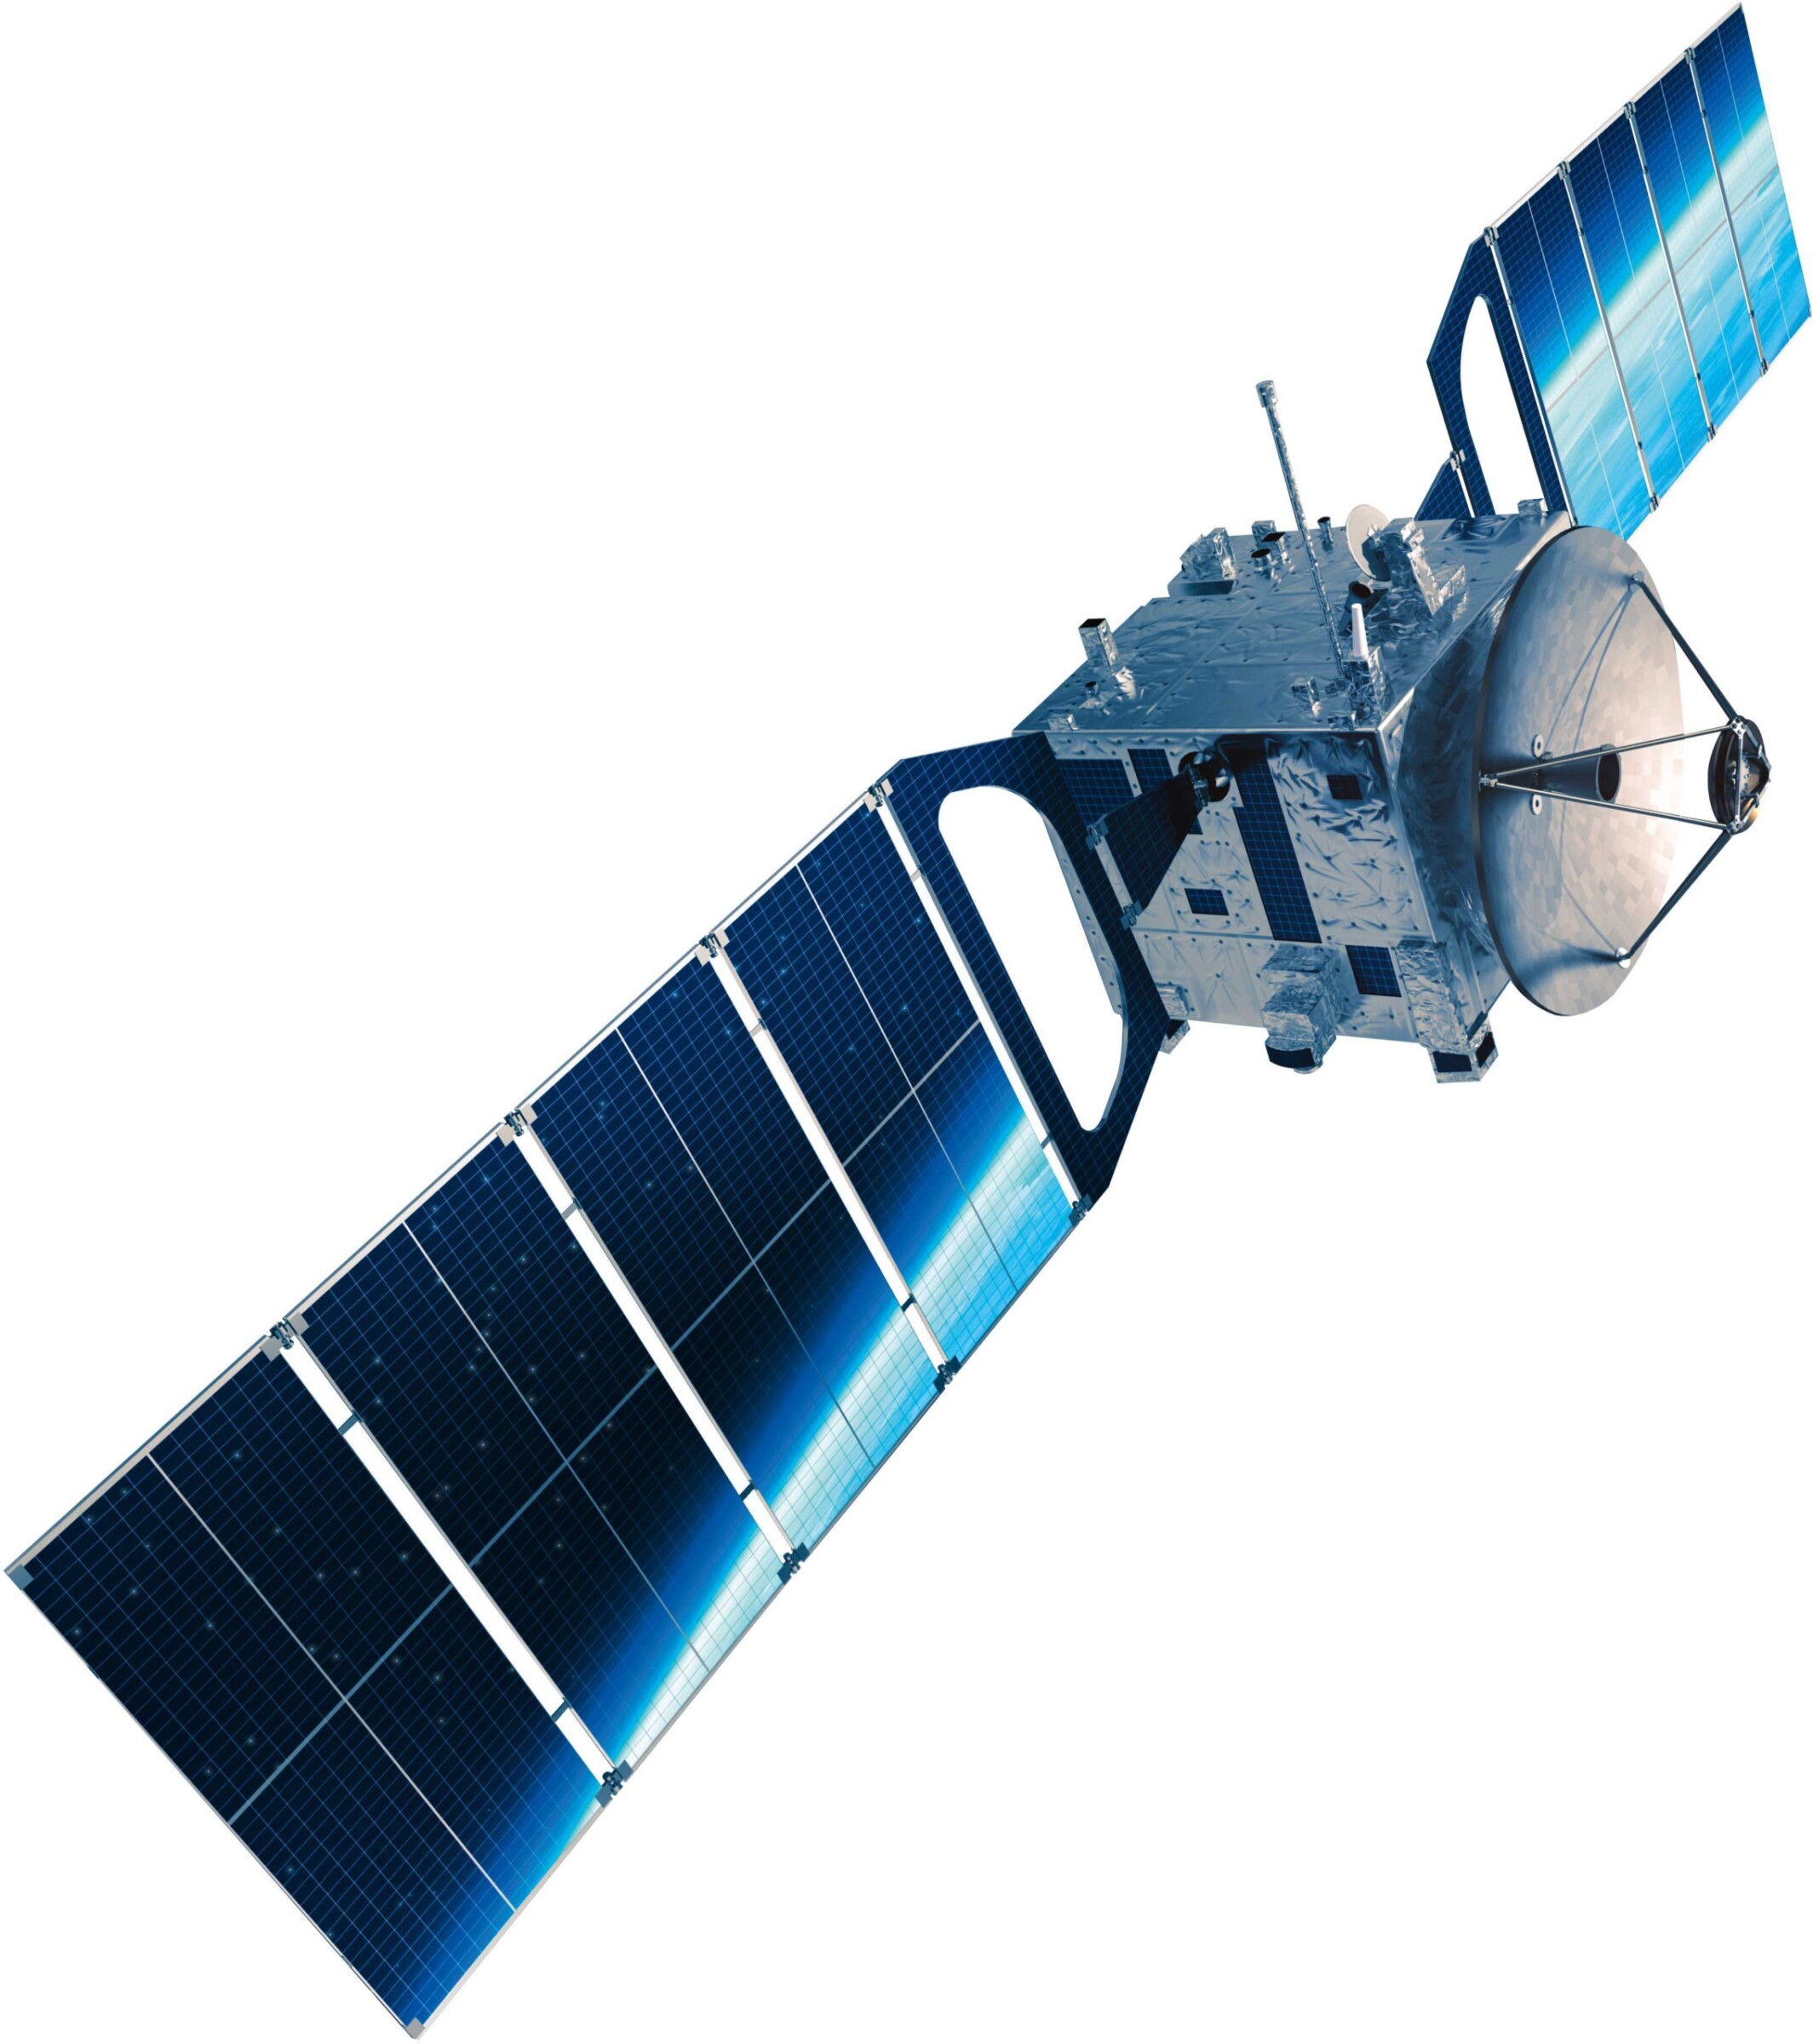 GALACTIC. Mitsubishi Electric has sent 40 satellites into orbit.